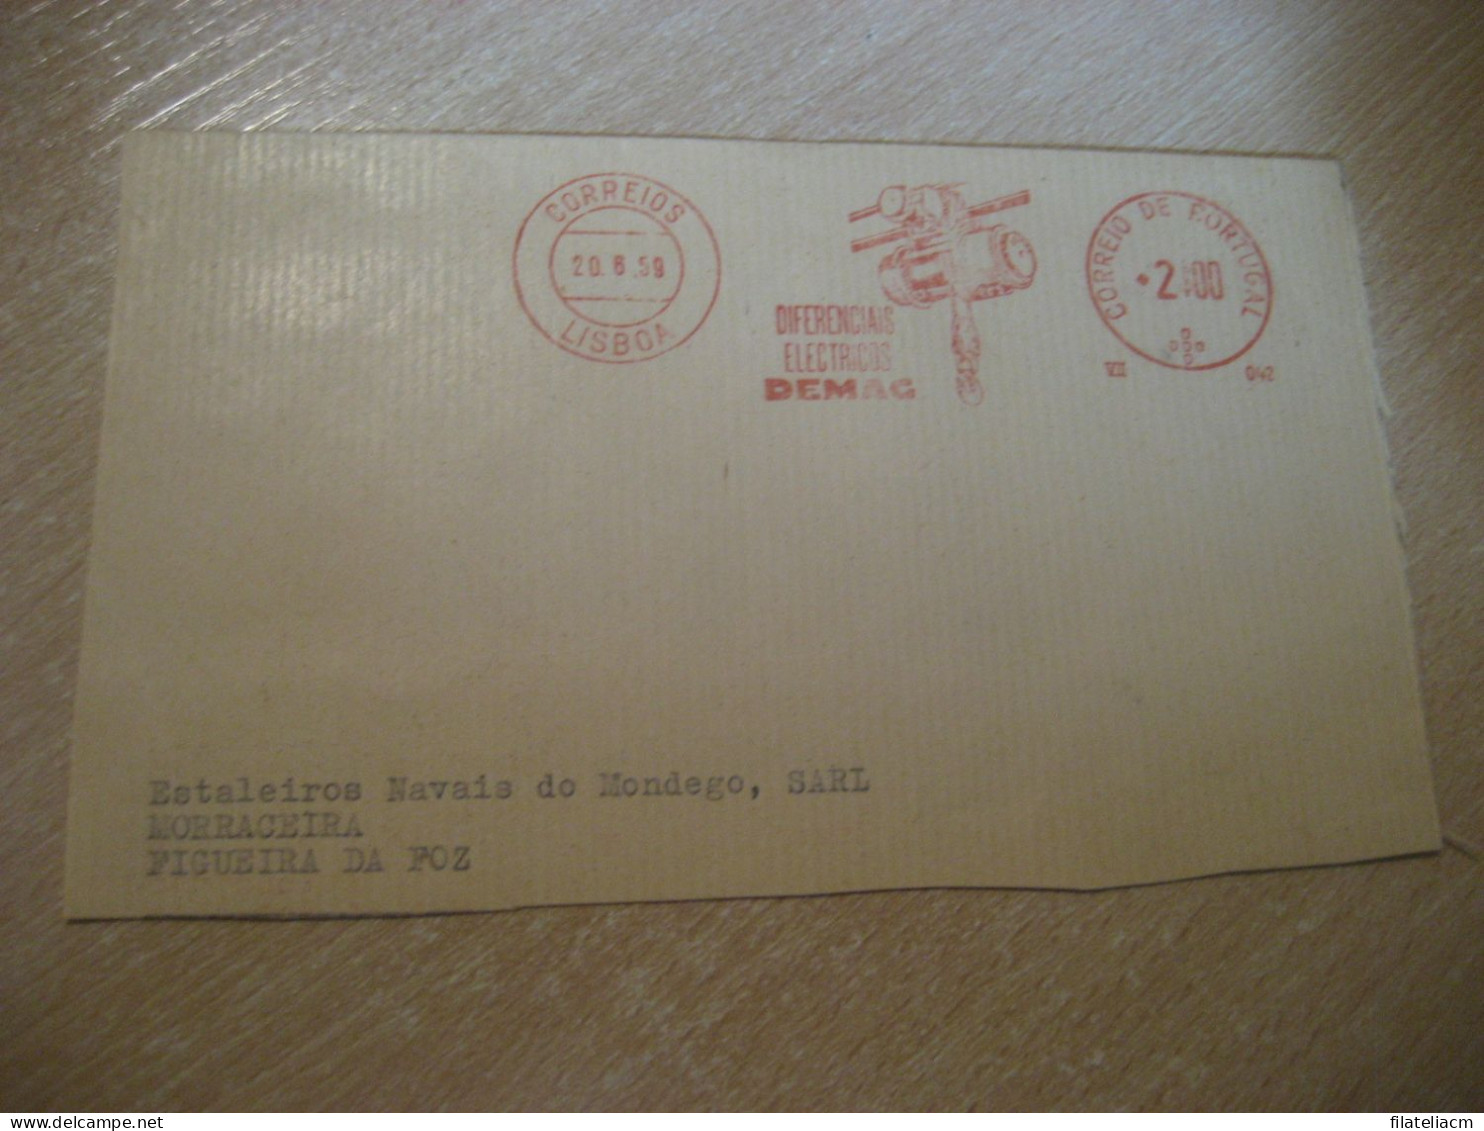 LISBOA 1959 To Figueira Da Foz DEMAC Diferenciais Electricos Physics Meter Mail Cancel Cut Cuted Cover PORTUGAL - Storia Postale